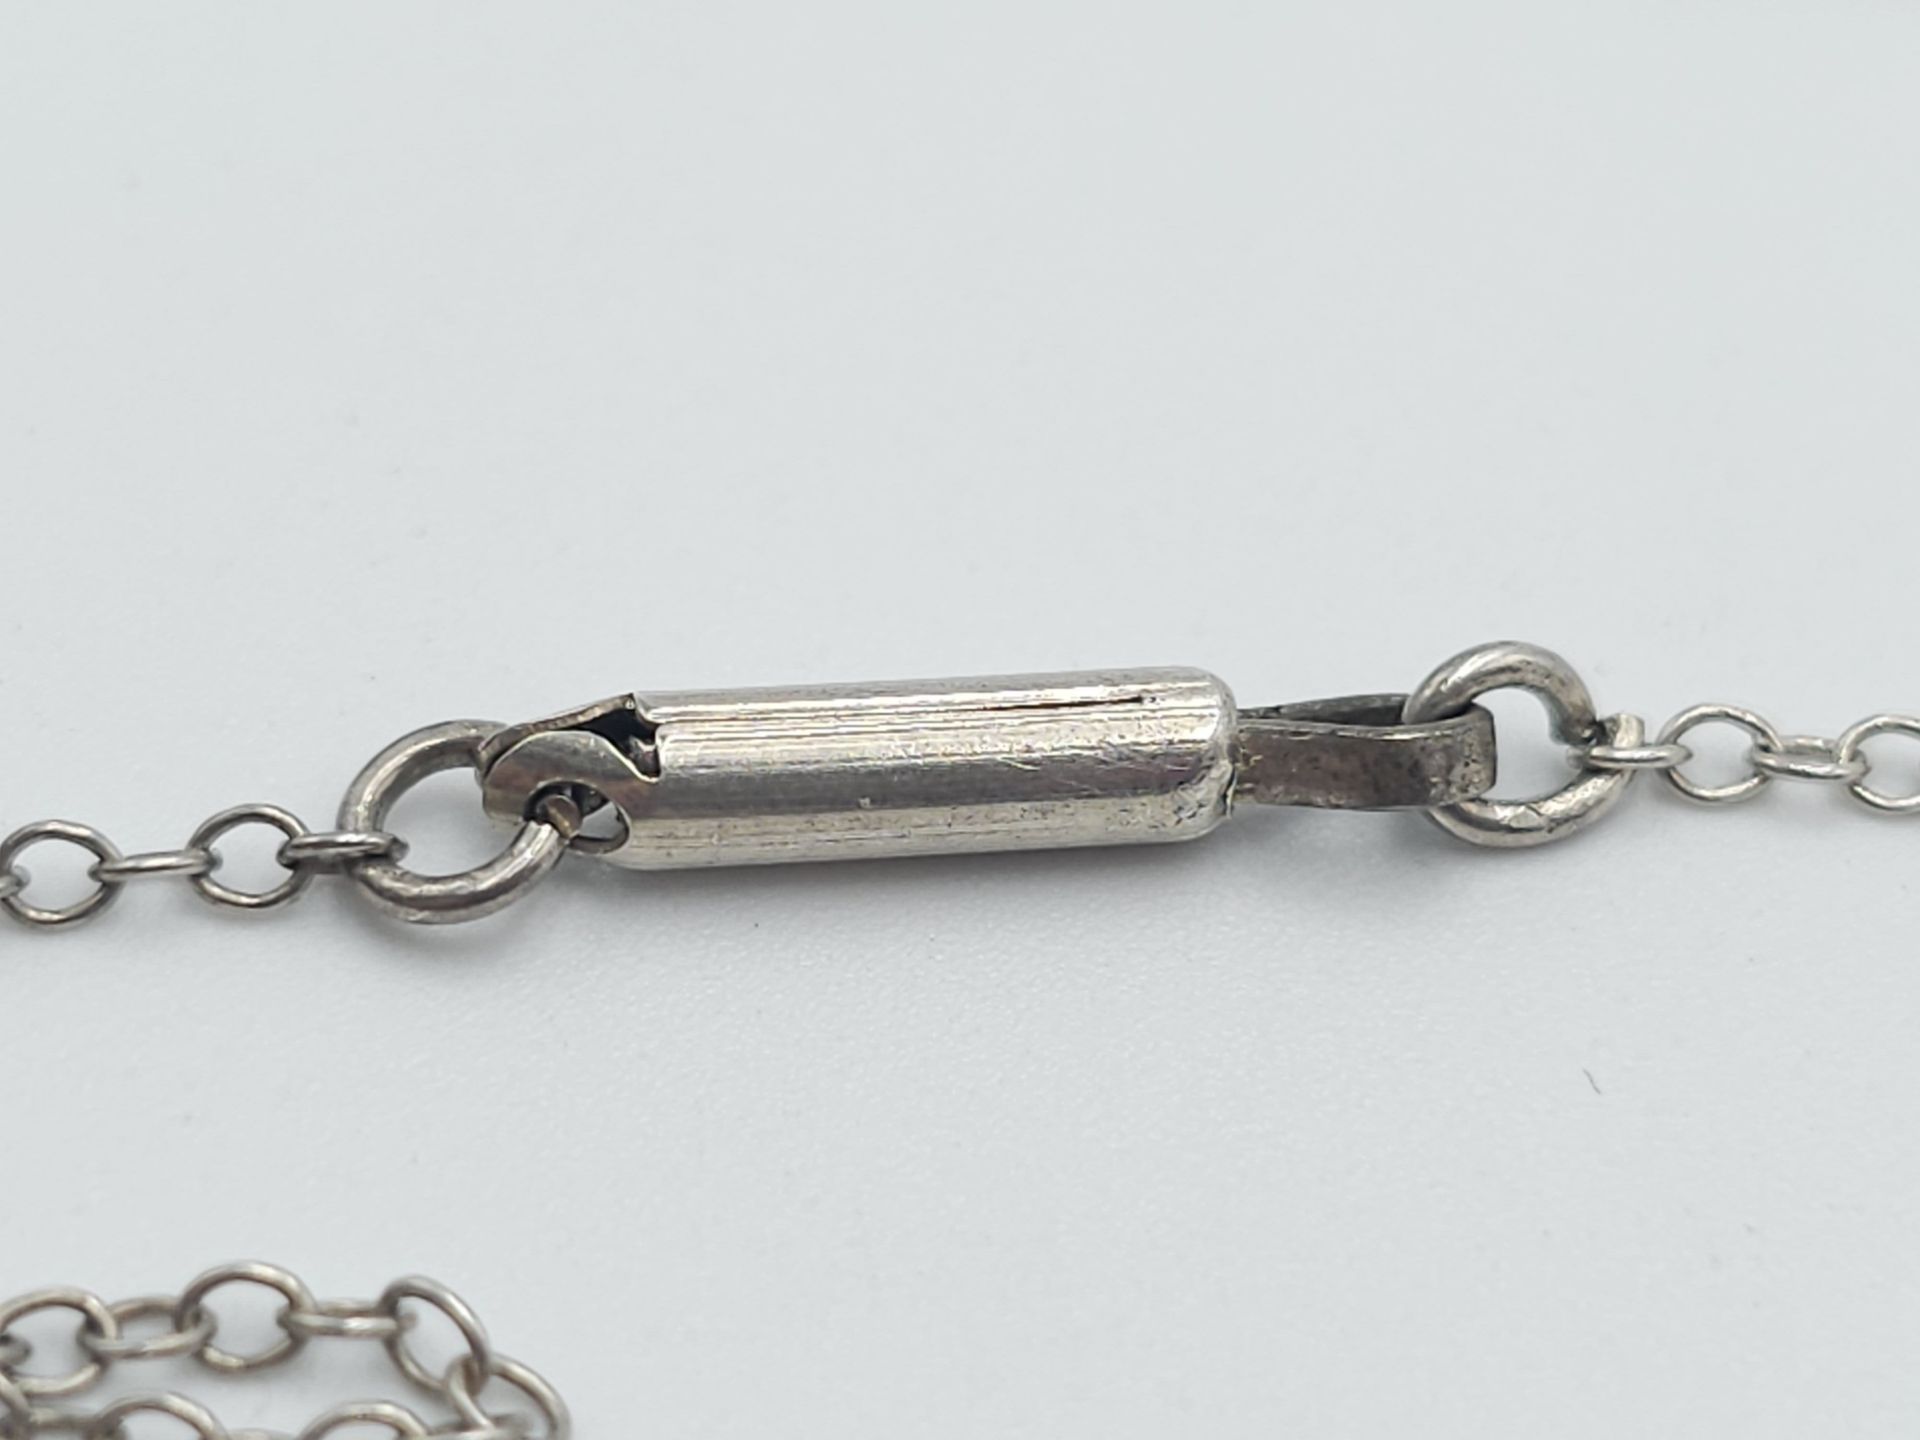 A Vintage Silver Roller Skate Pendant Necklace. 42cm Length. Silver Pendant has a Registered Mark on - Image 6 of 9